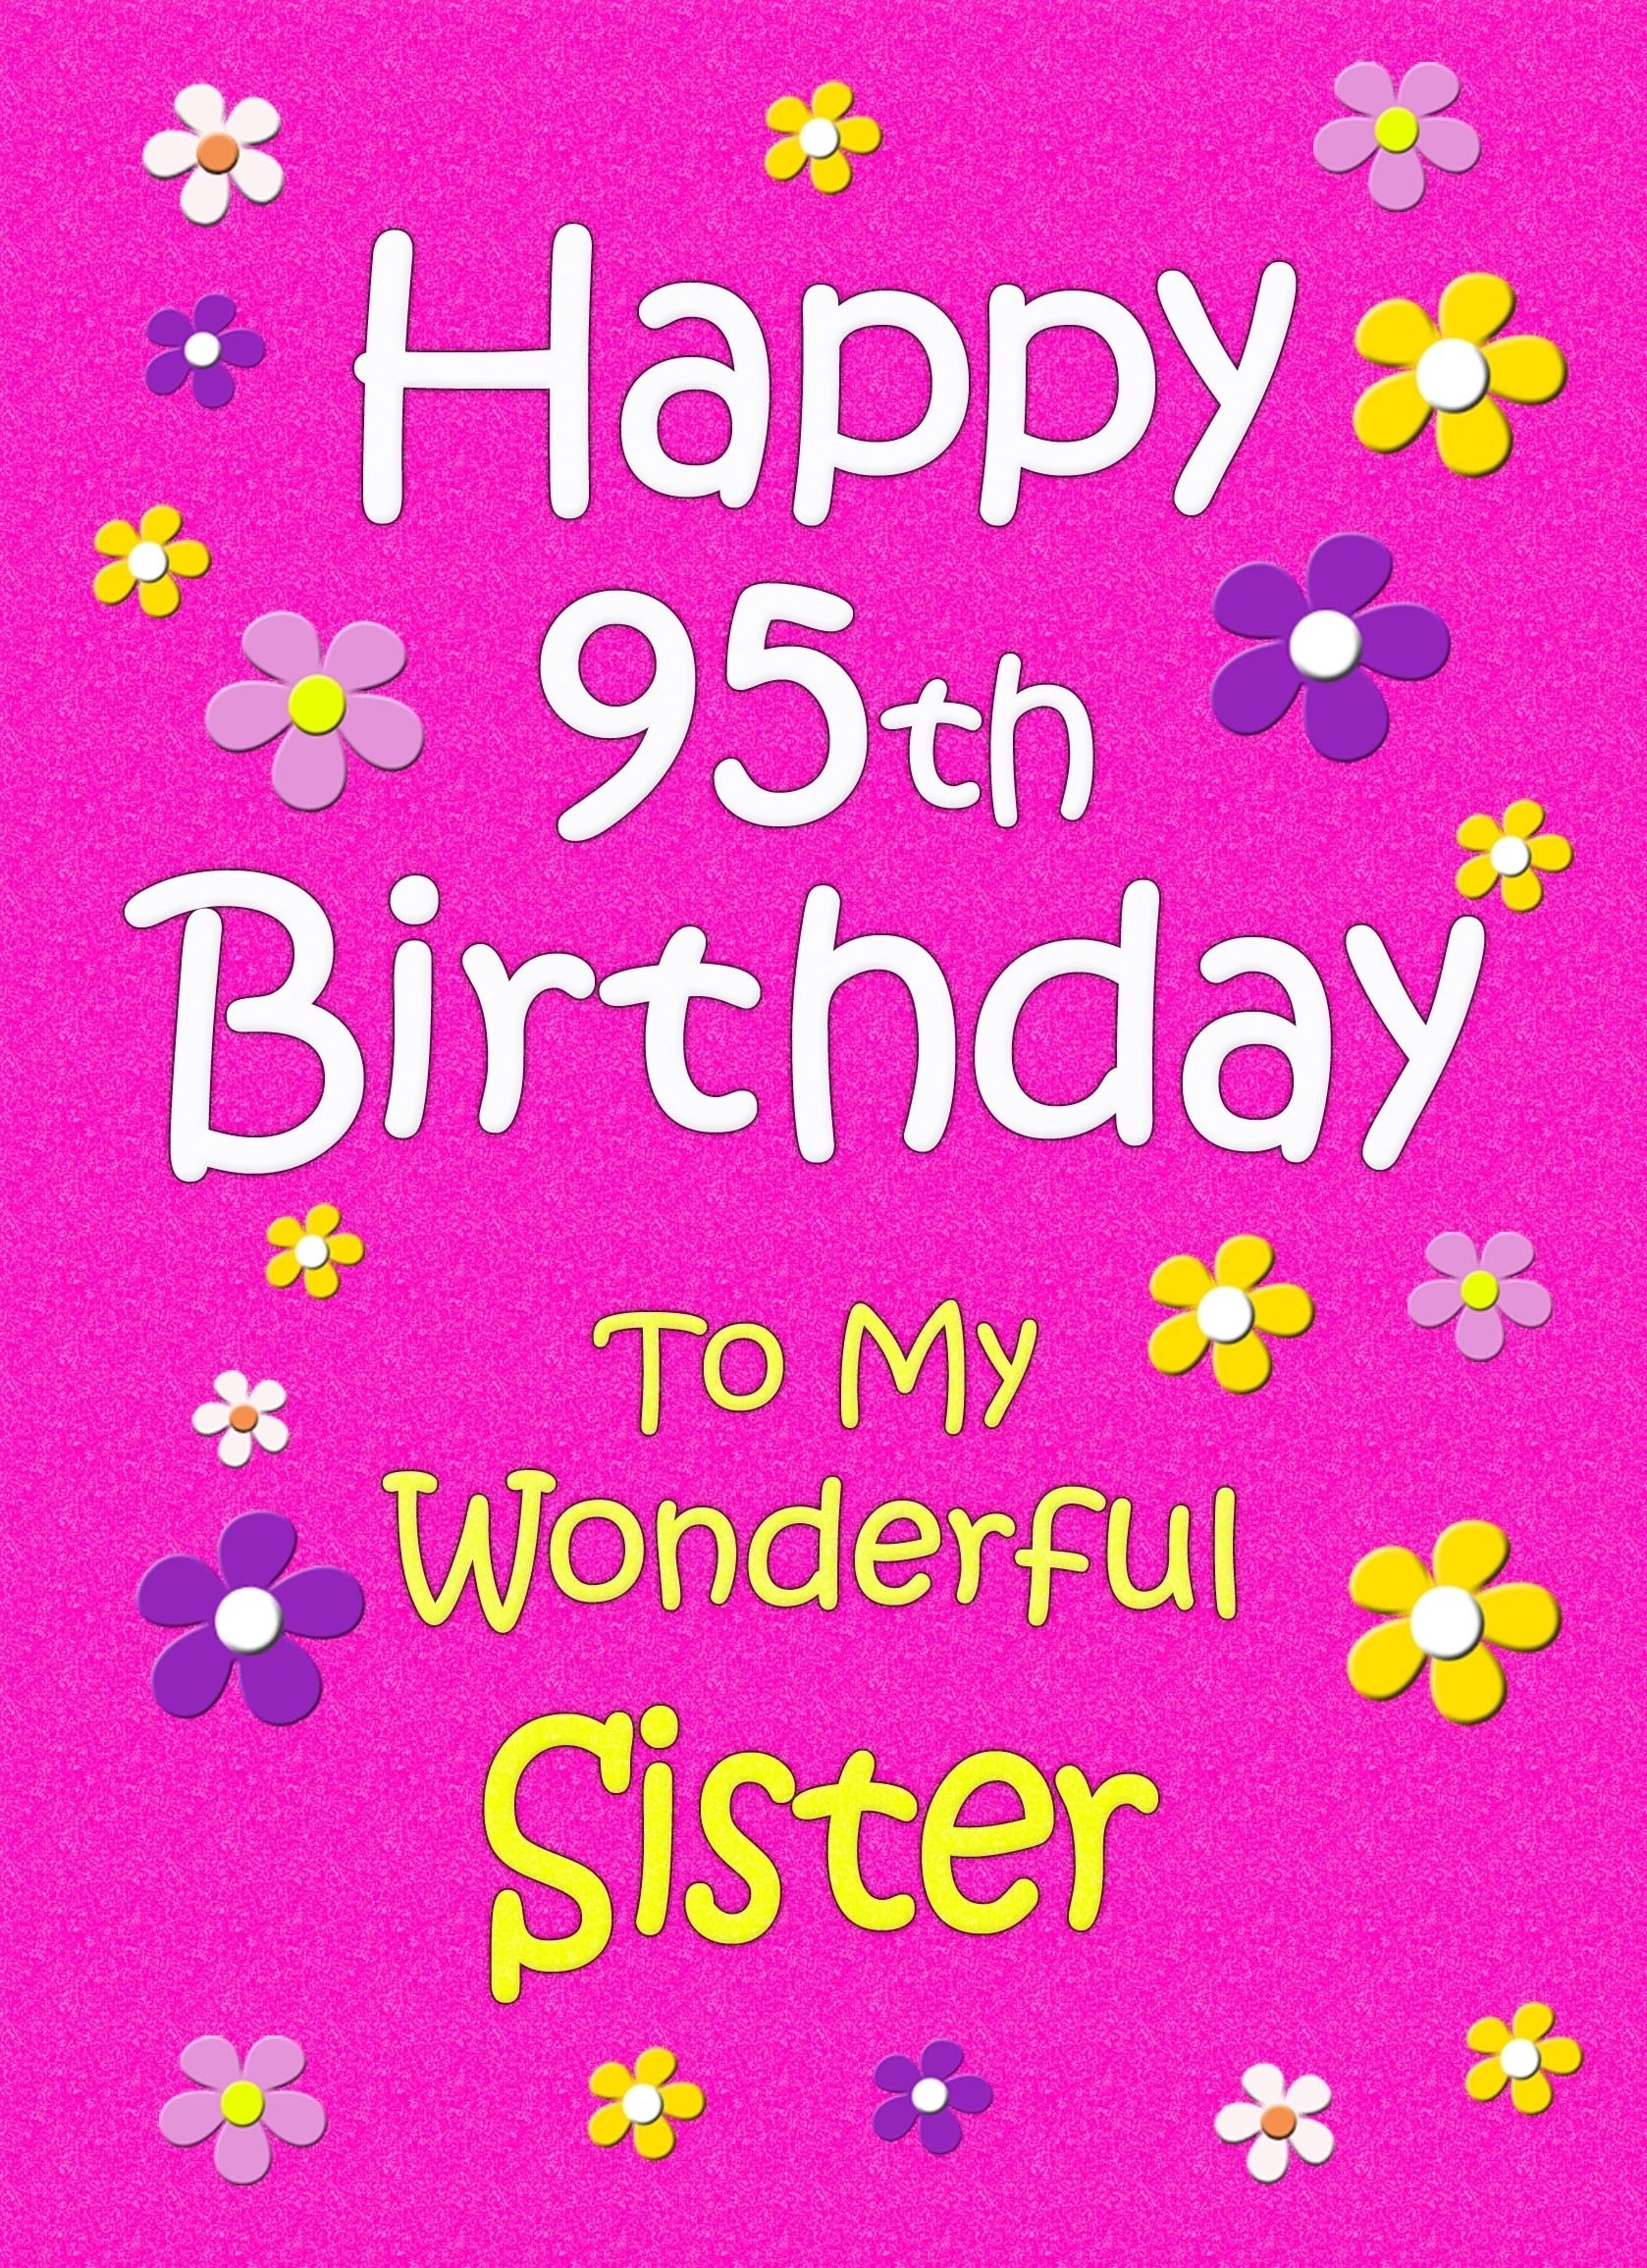 Sister 95th Birthday Card (Pink)